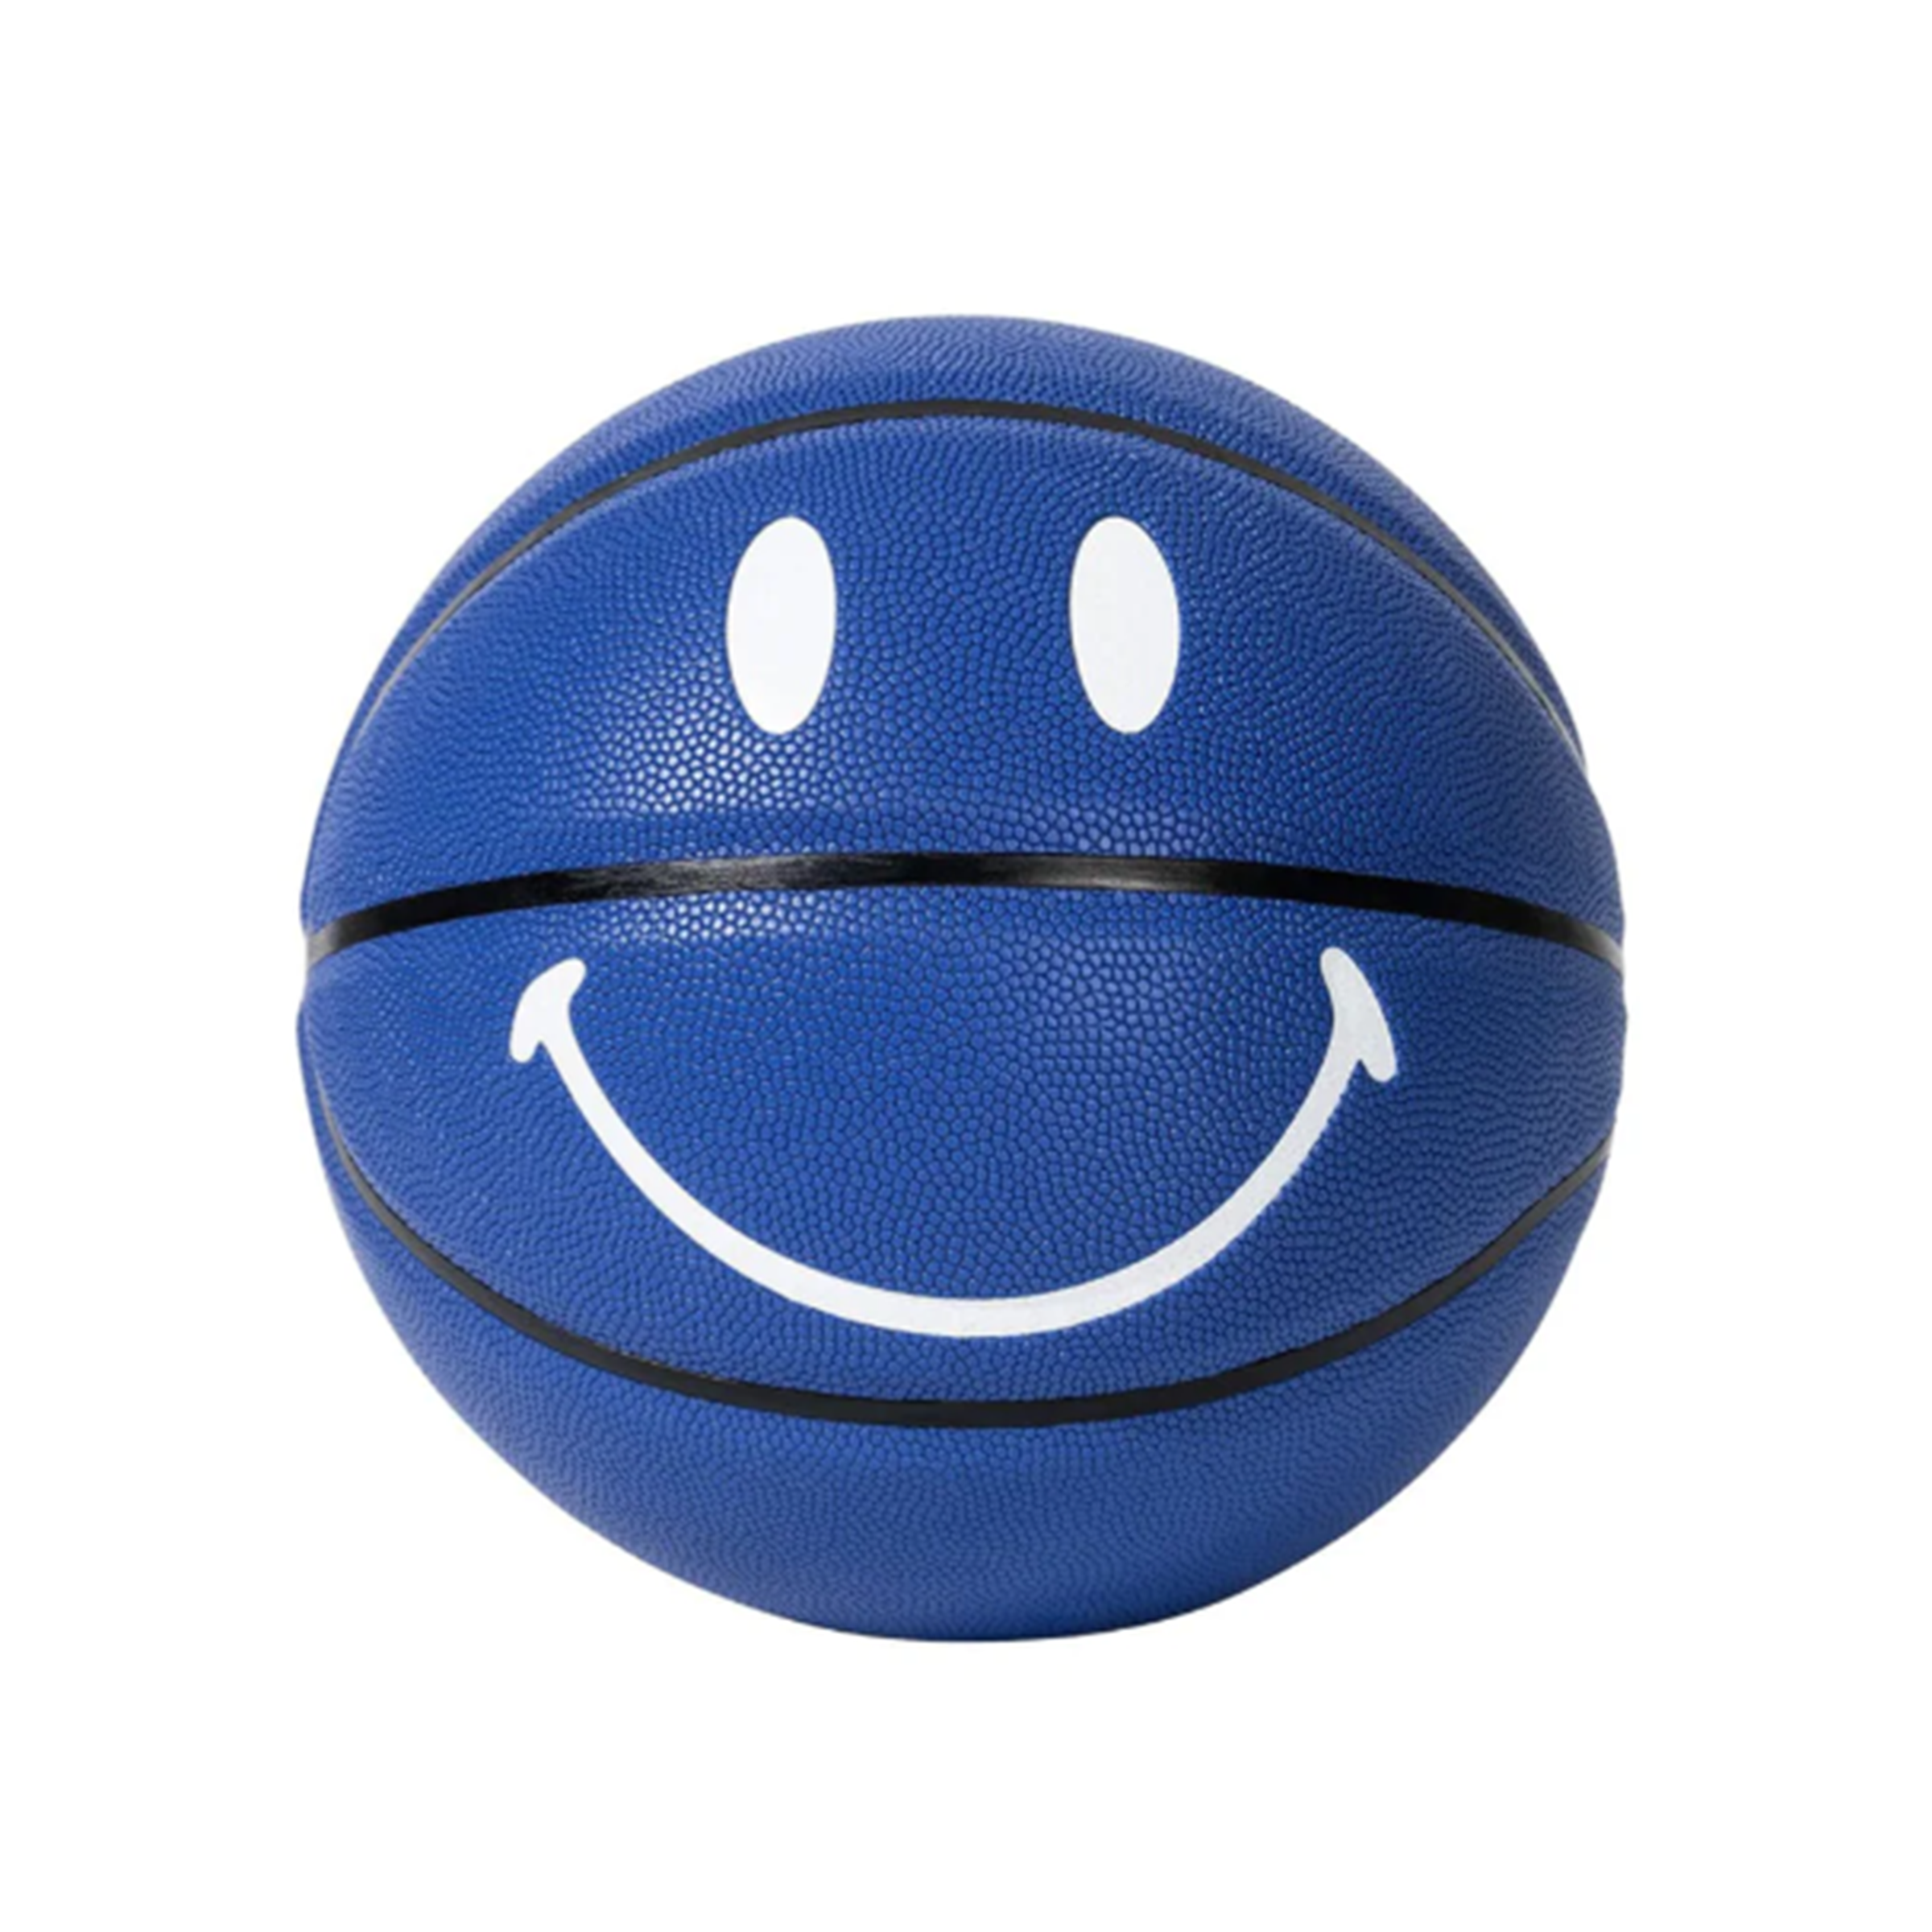 Market "Blue" Smiley Basketball